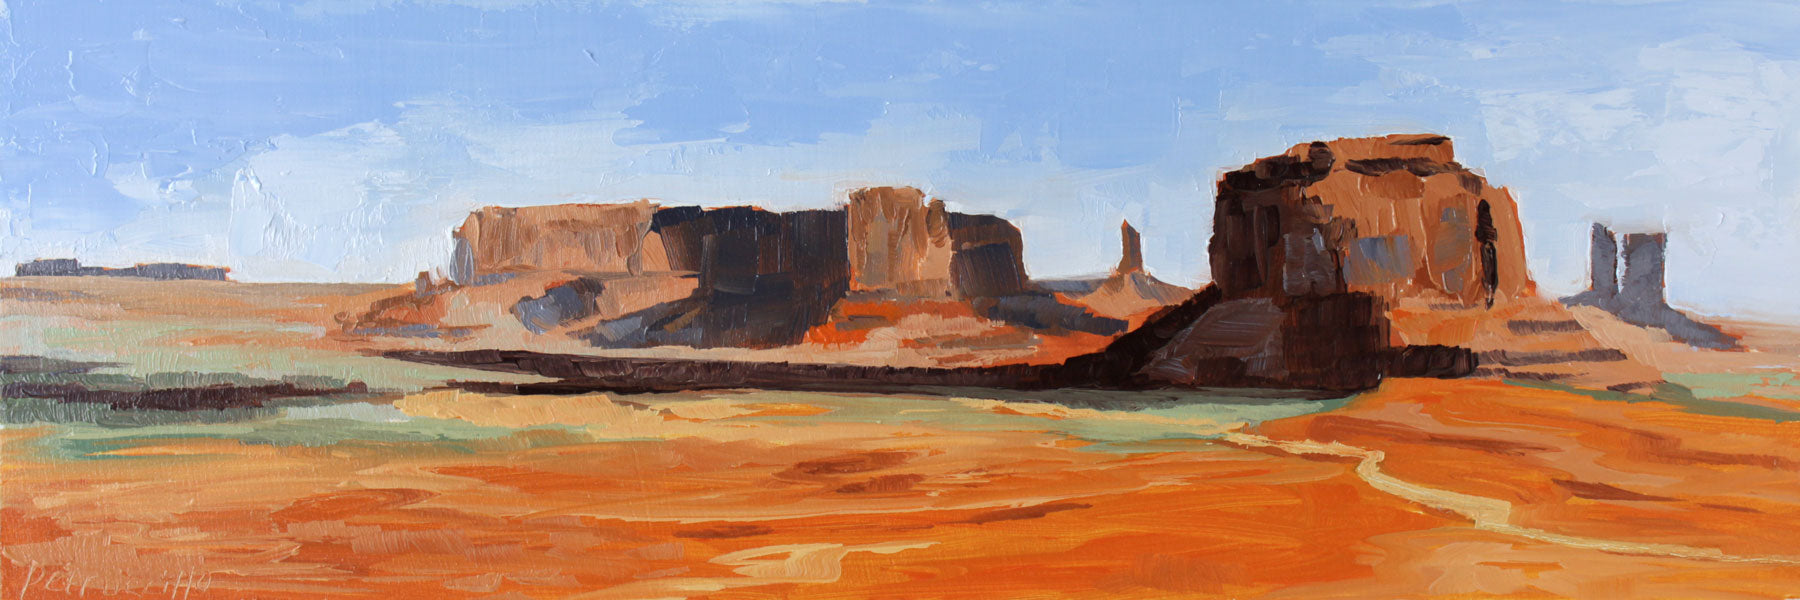 oil painting of monument valley, navajo nation, arizona-utah